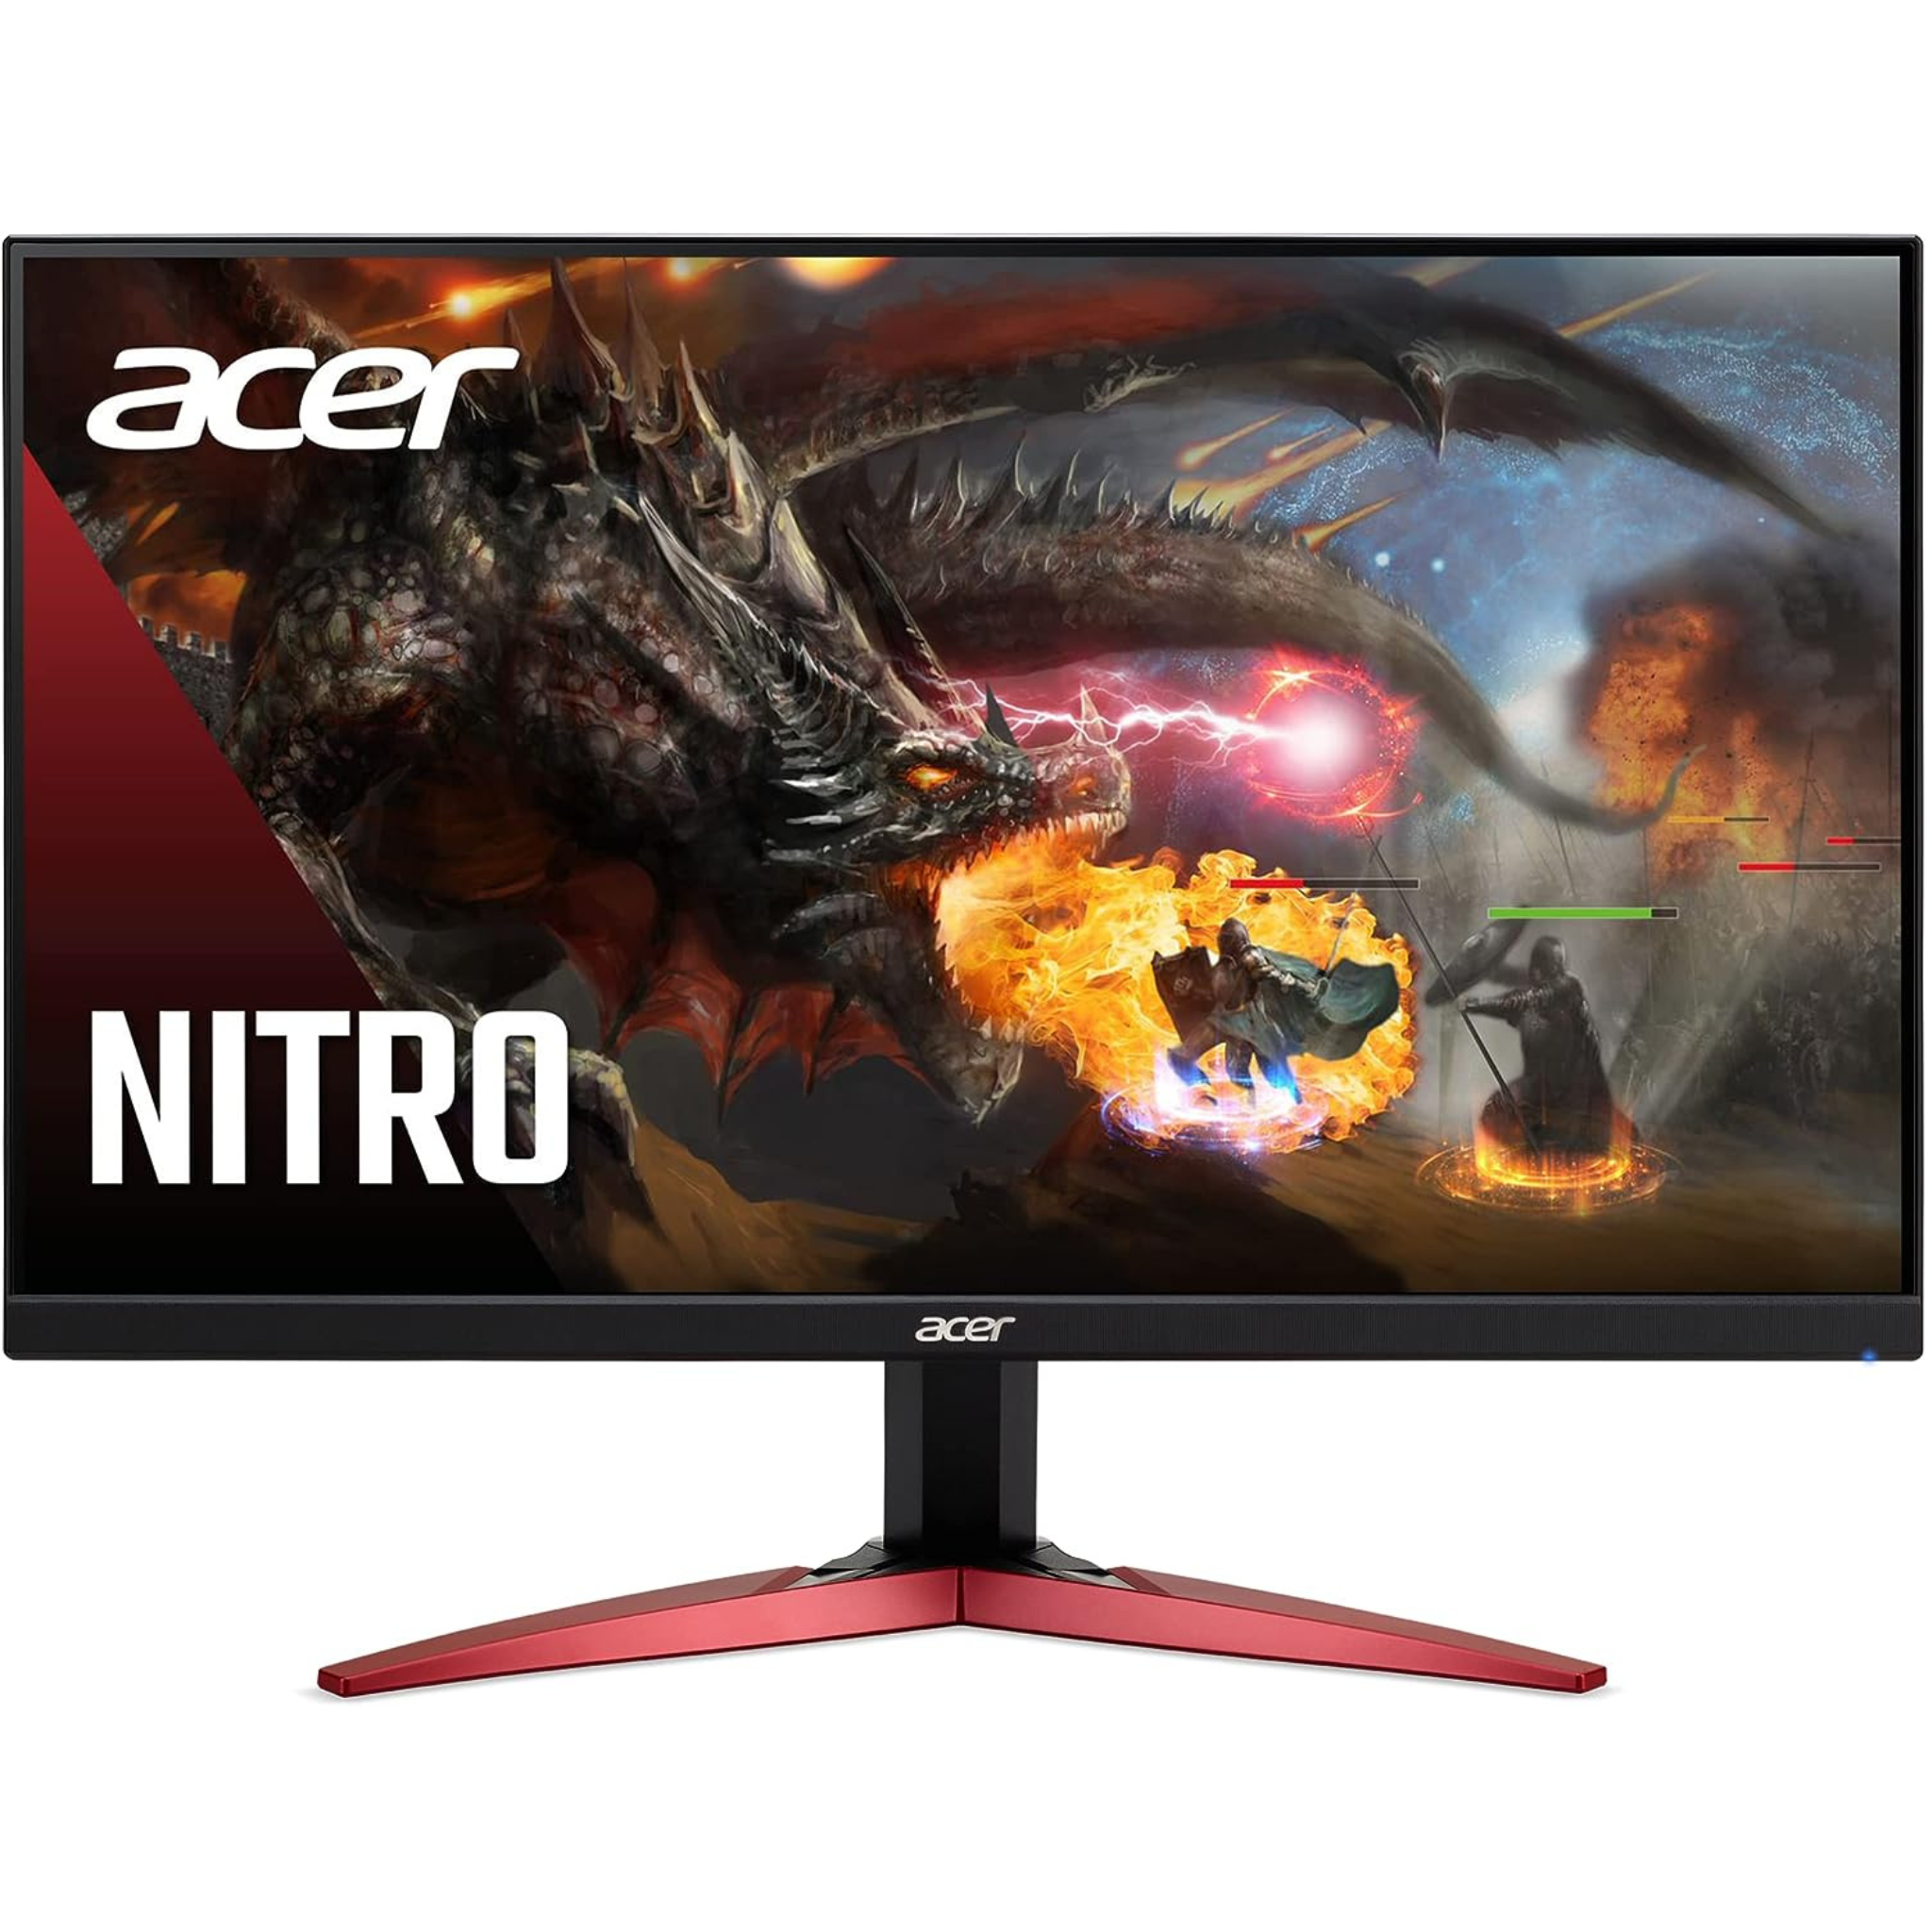 Acer Nitro KG241Y Sbiip 23.8" FHD VA LED Gaming Monitor